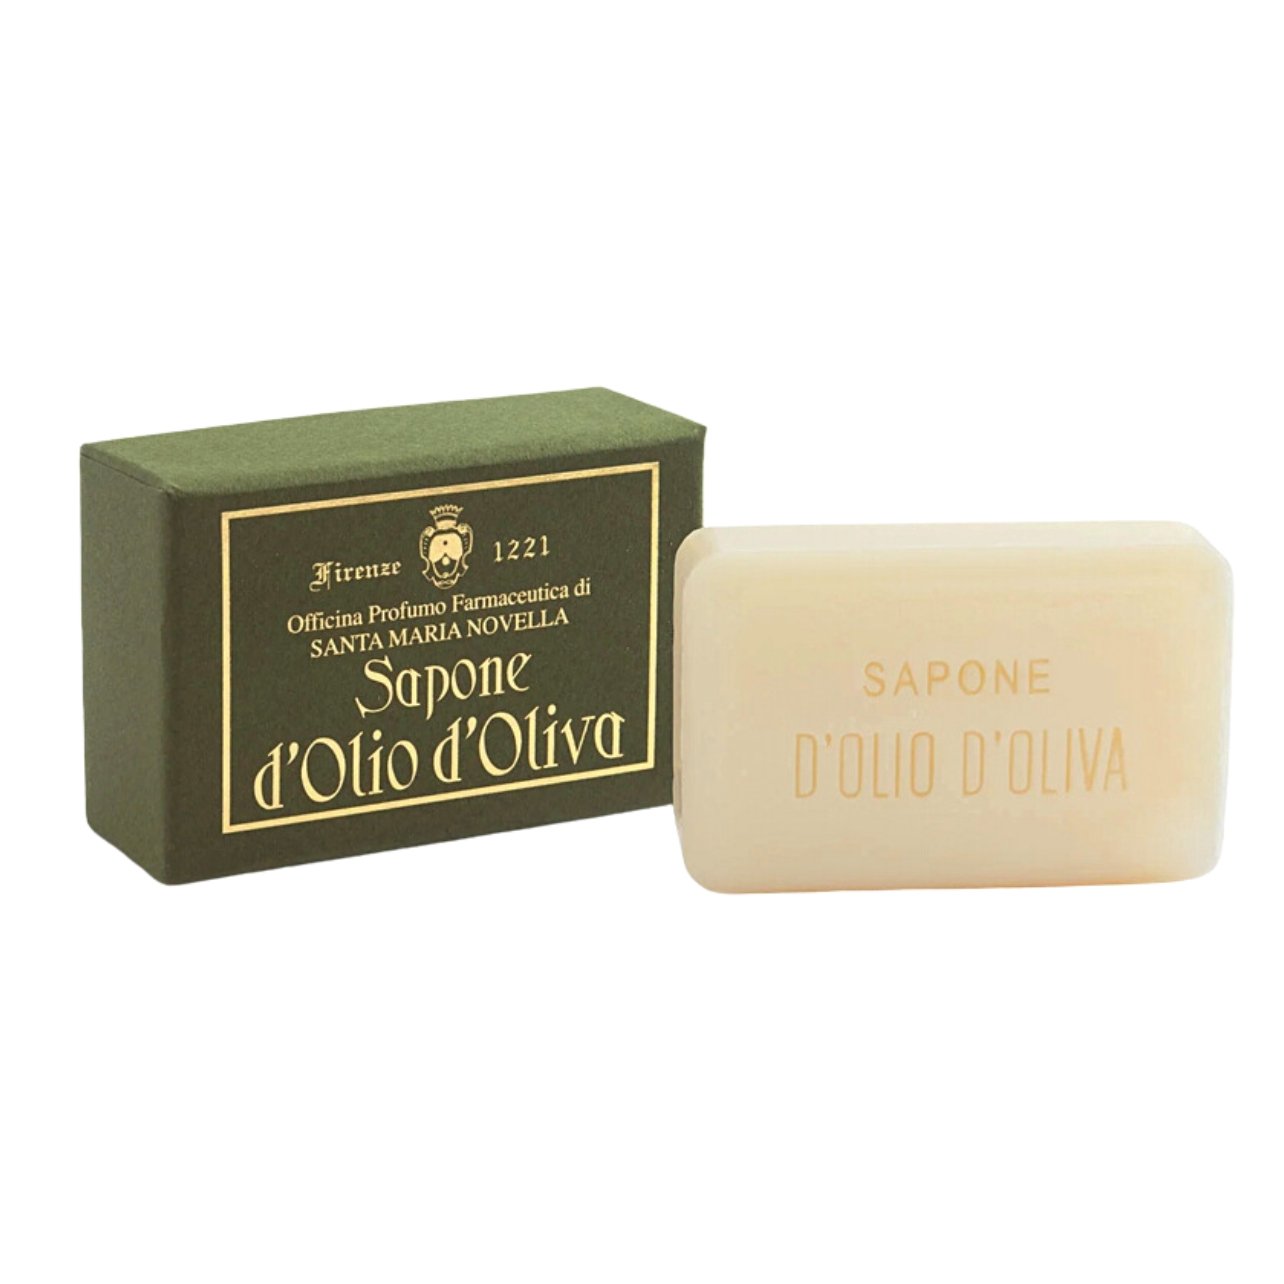 Santa Maria Novella olive oil soap bar